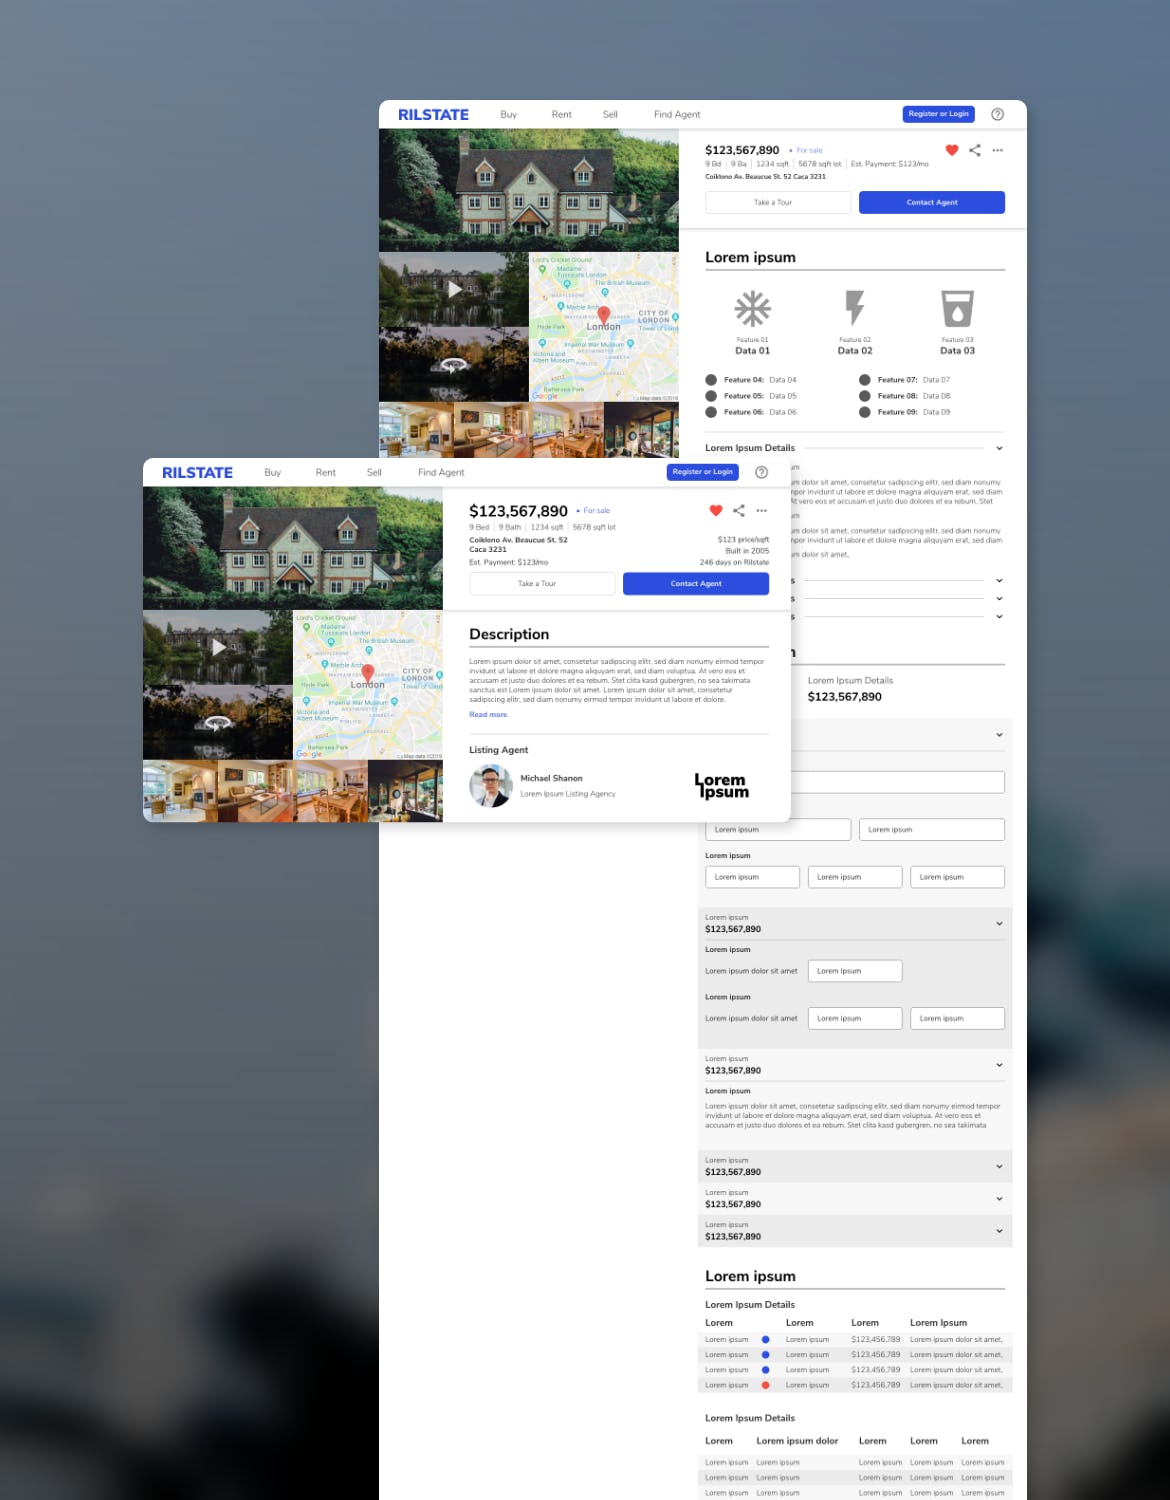 房地产租赁销售网站设计HTML模板素材库精选 RILSTATE – Real Estate Homepage Template插图(4)